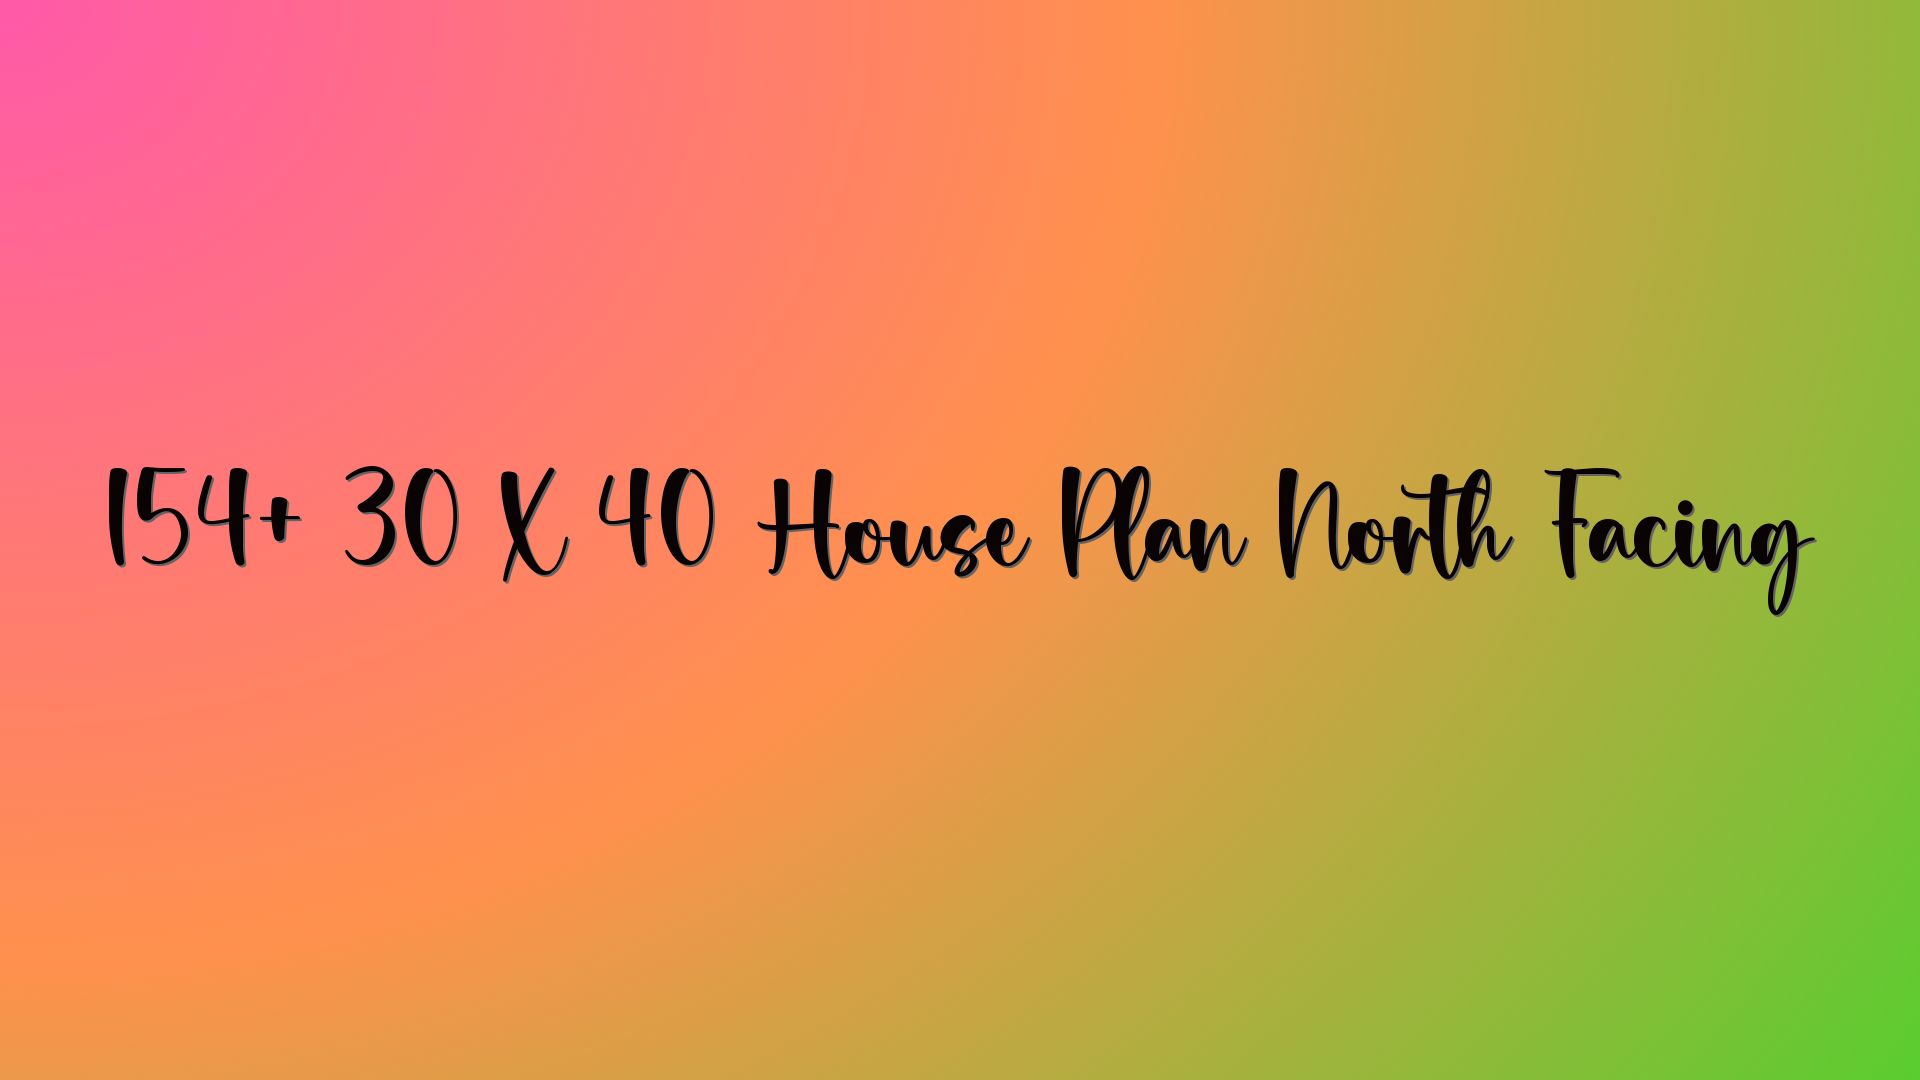 154+ 30 X 40 House Plan North Facing